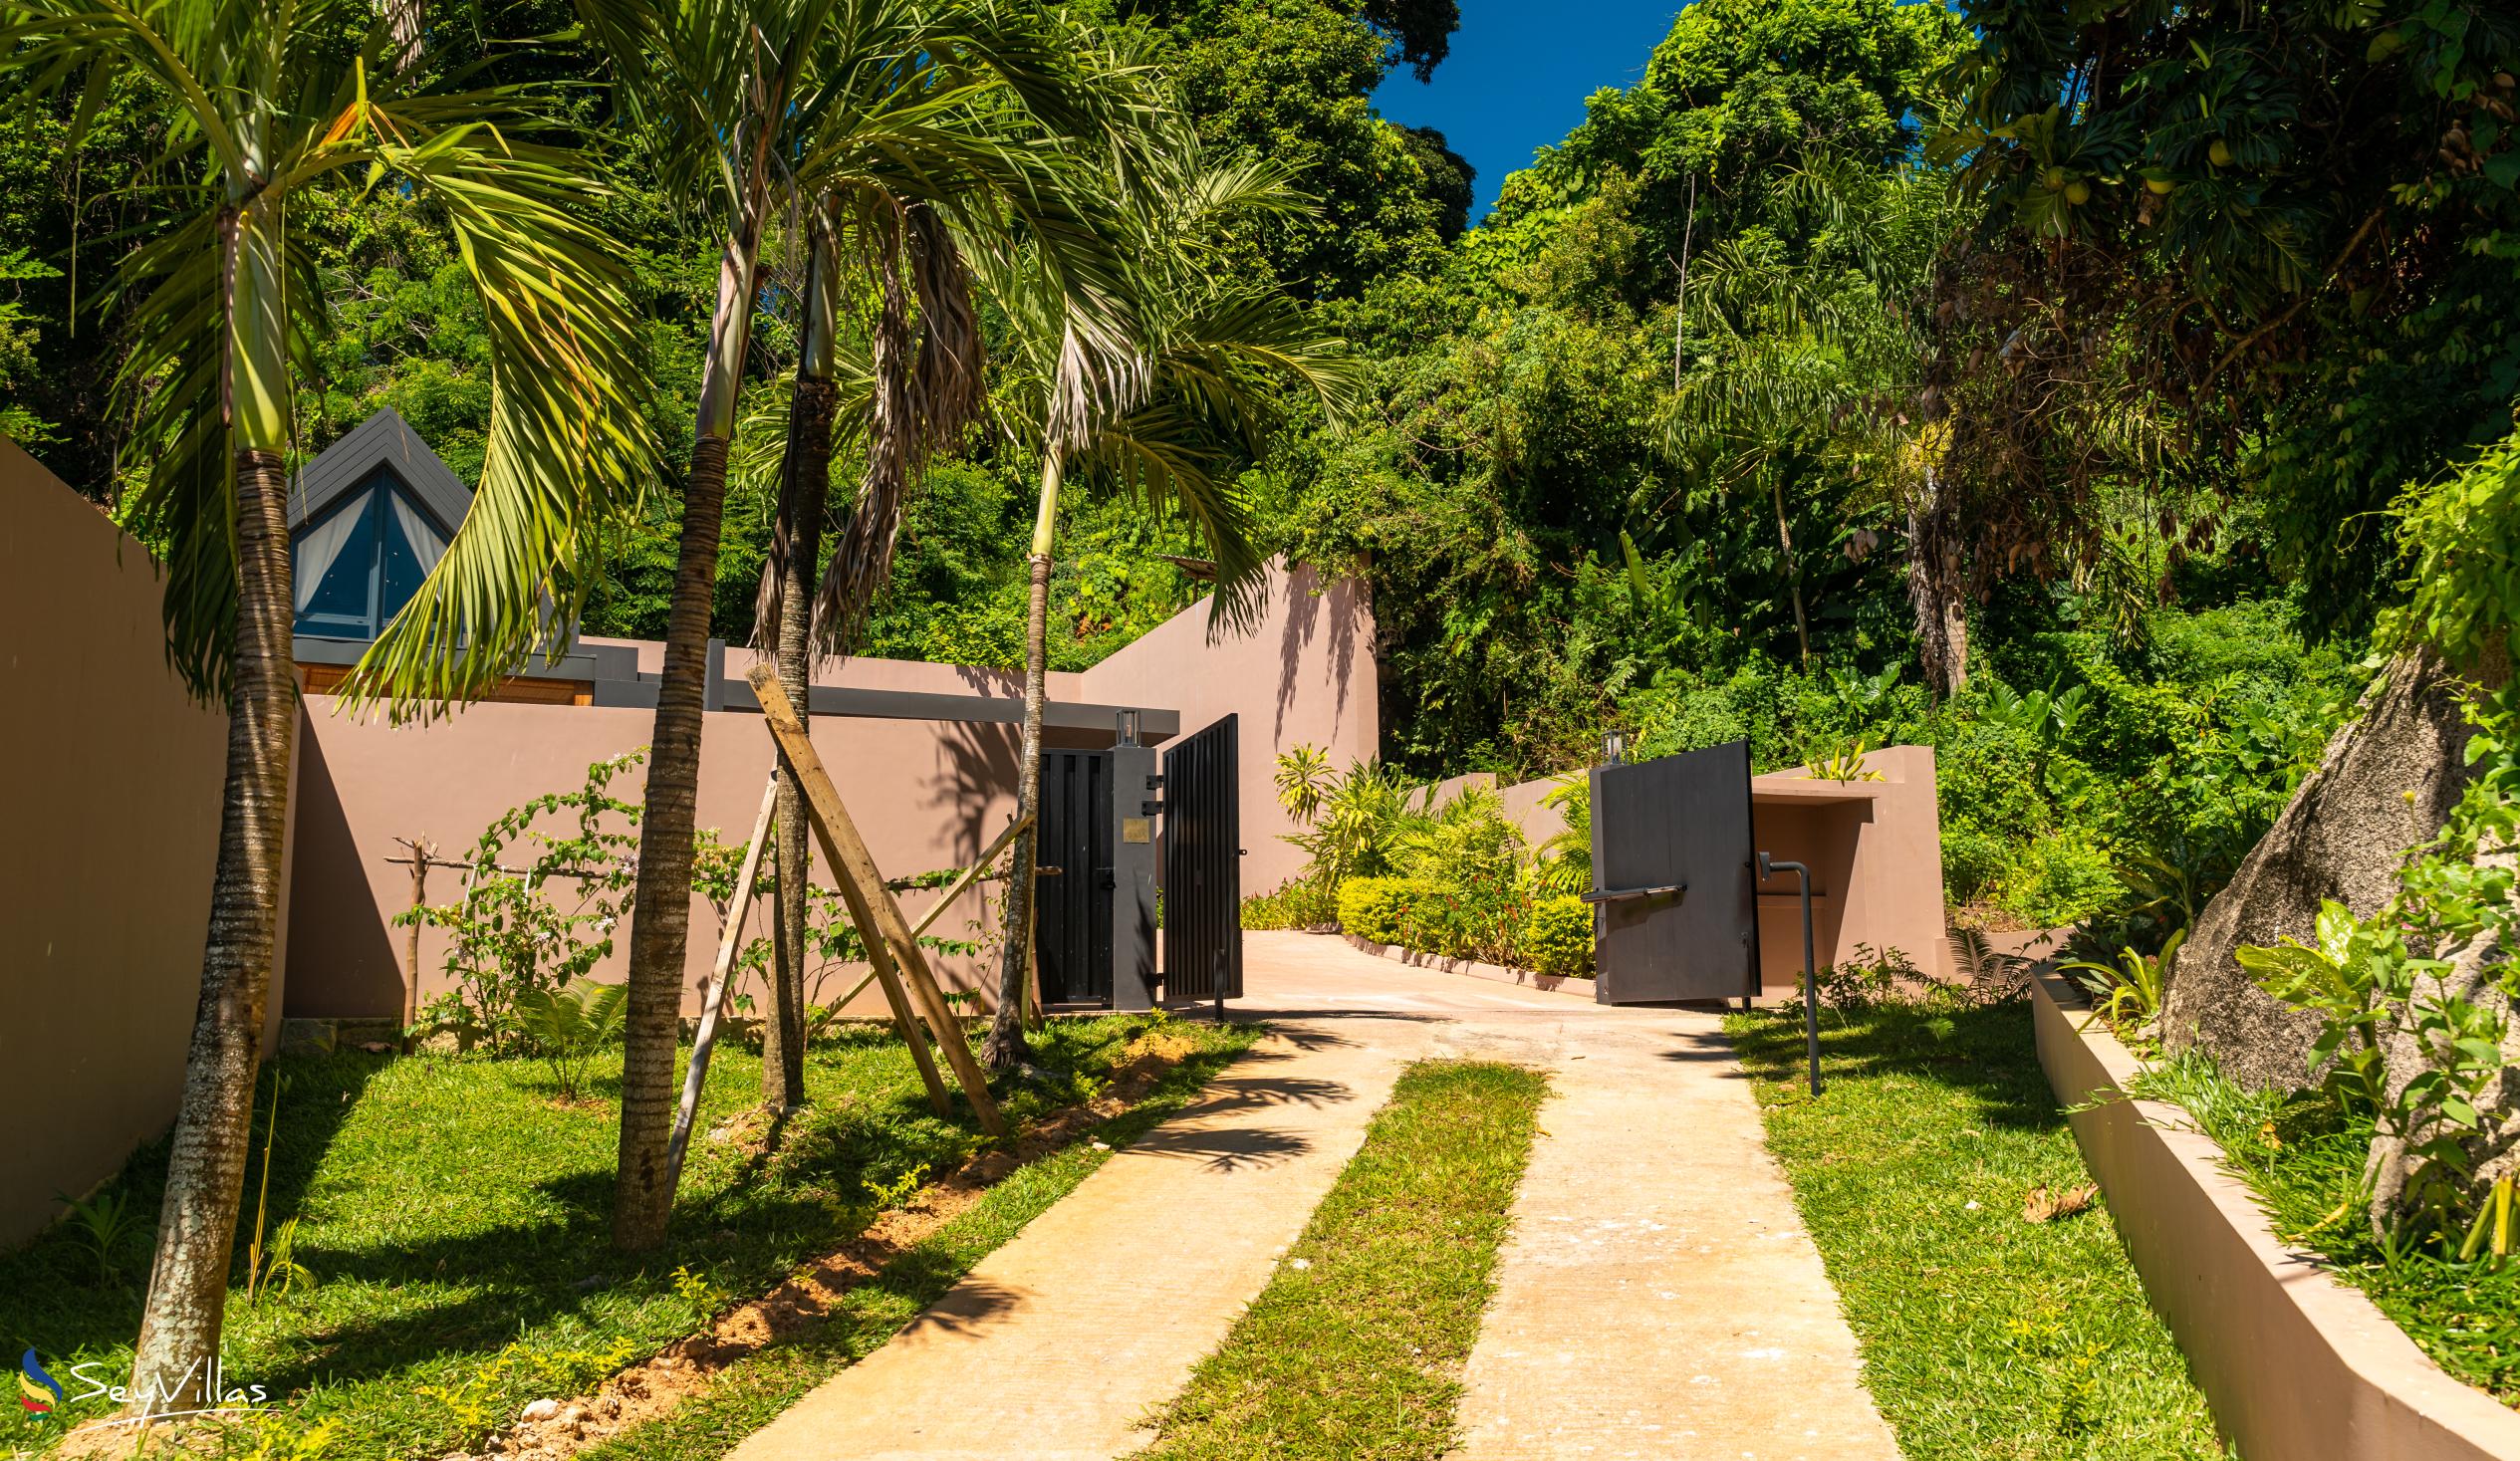 Photo 16: Maison Gaia - Outdoor area - Mahé (Seychelles)